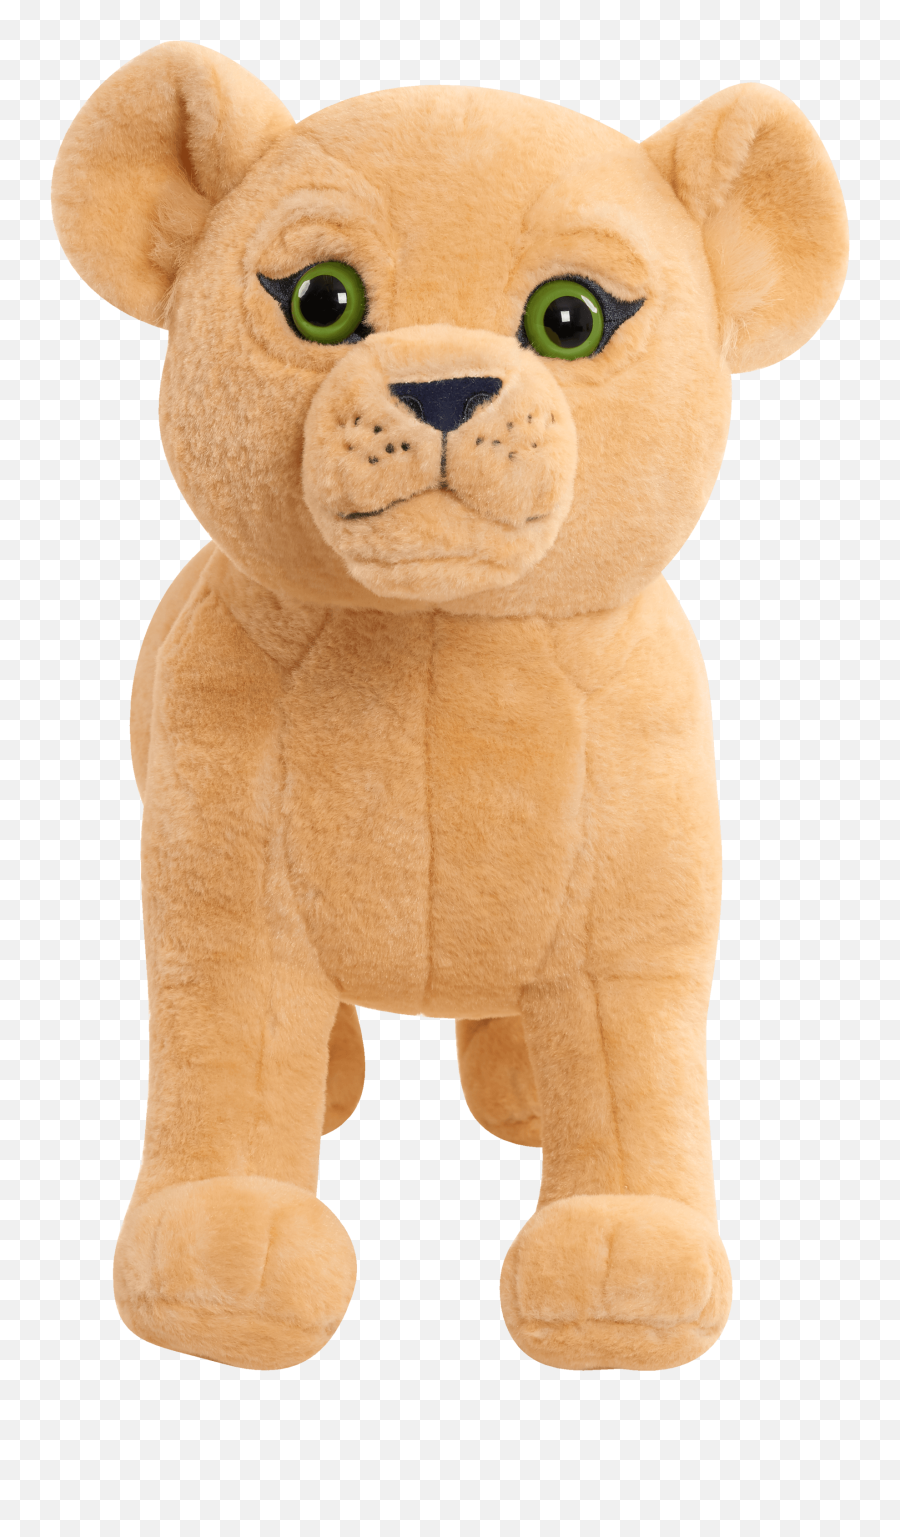 The Lion King Jumbo Plush - Lion King 2019 Plush Simba And Nala Emoji,Live Action Lion King Needs More Emotions In Faces